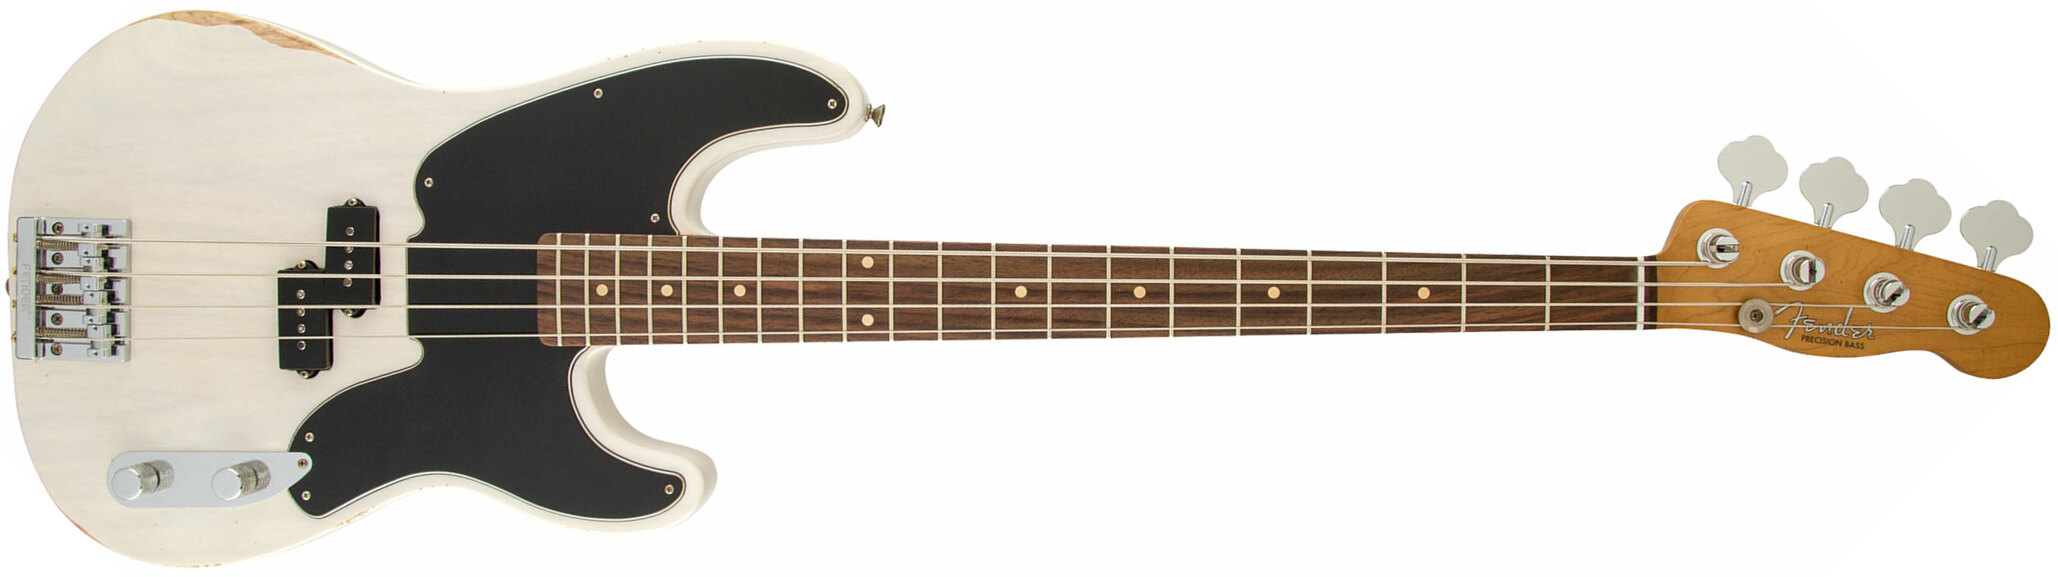 Fender Mike Dirnt Precision Bass Mex Signature Rw - White Blonde - Basse Électrique Solid Body - Main picture